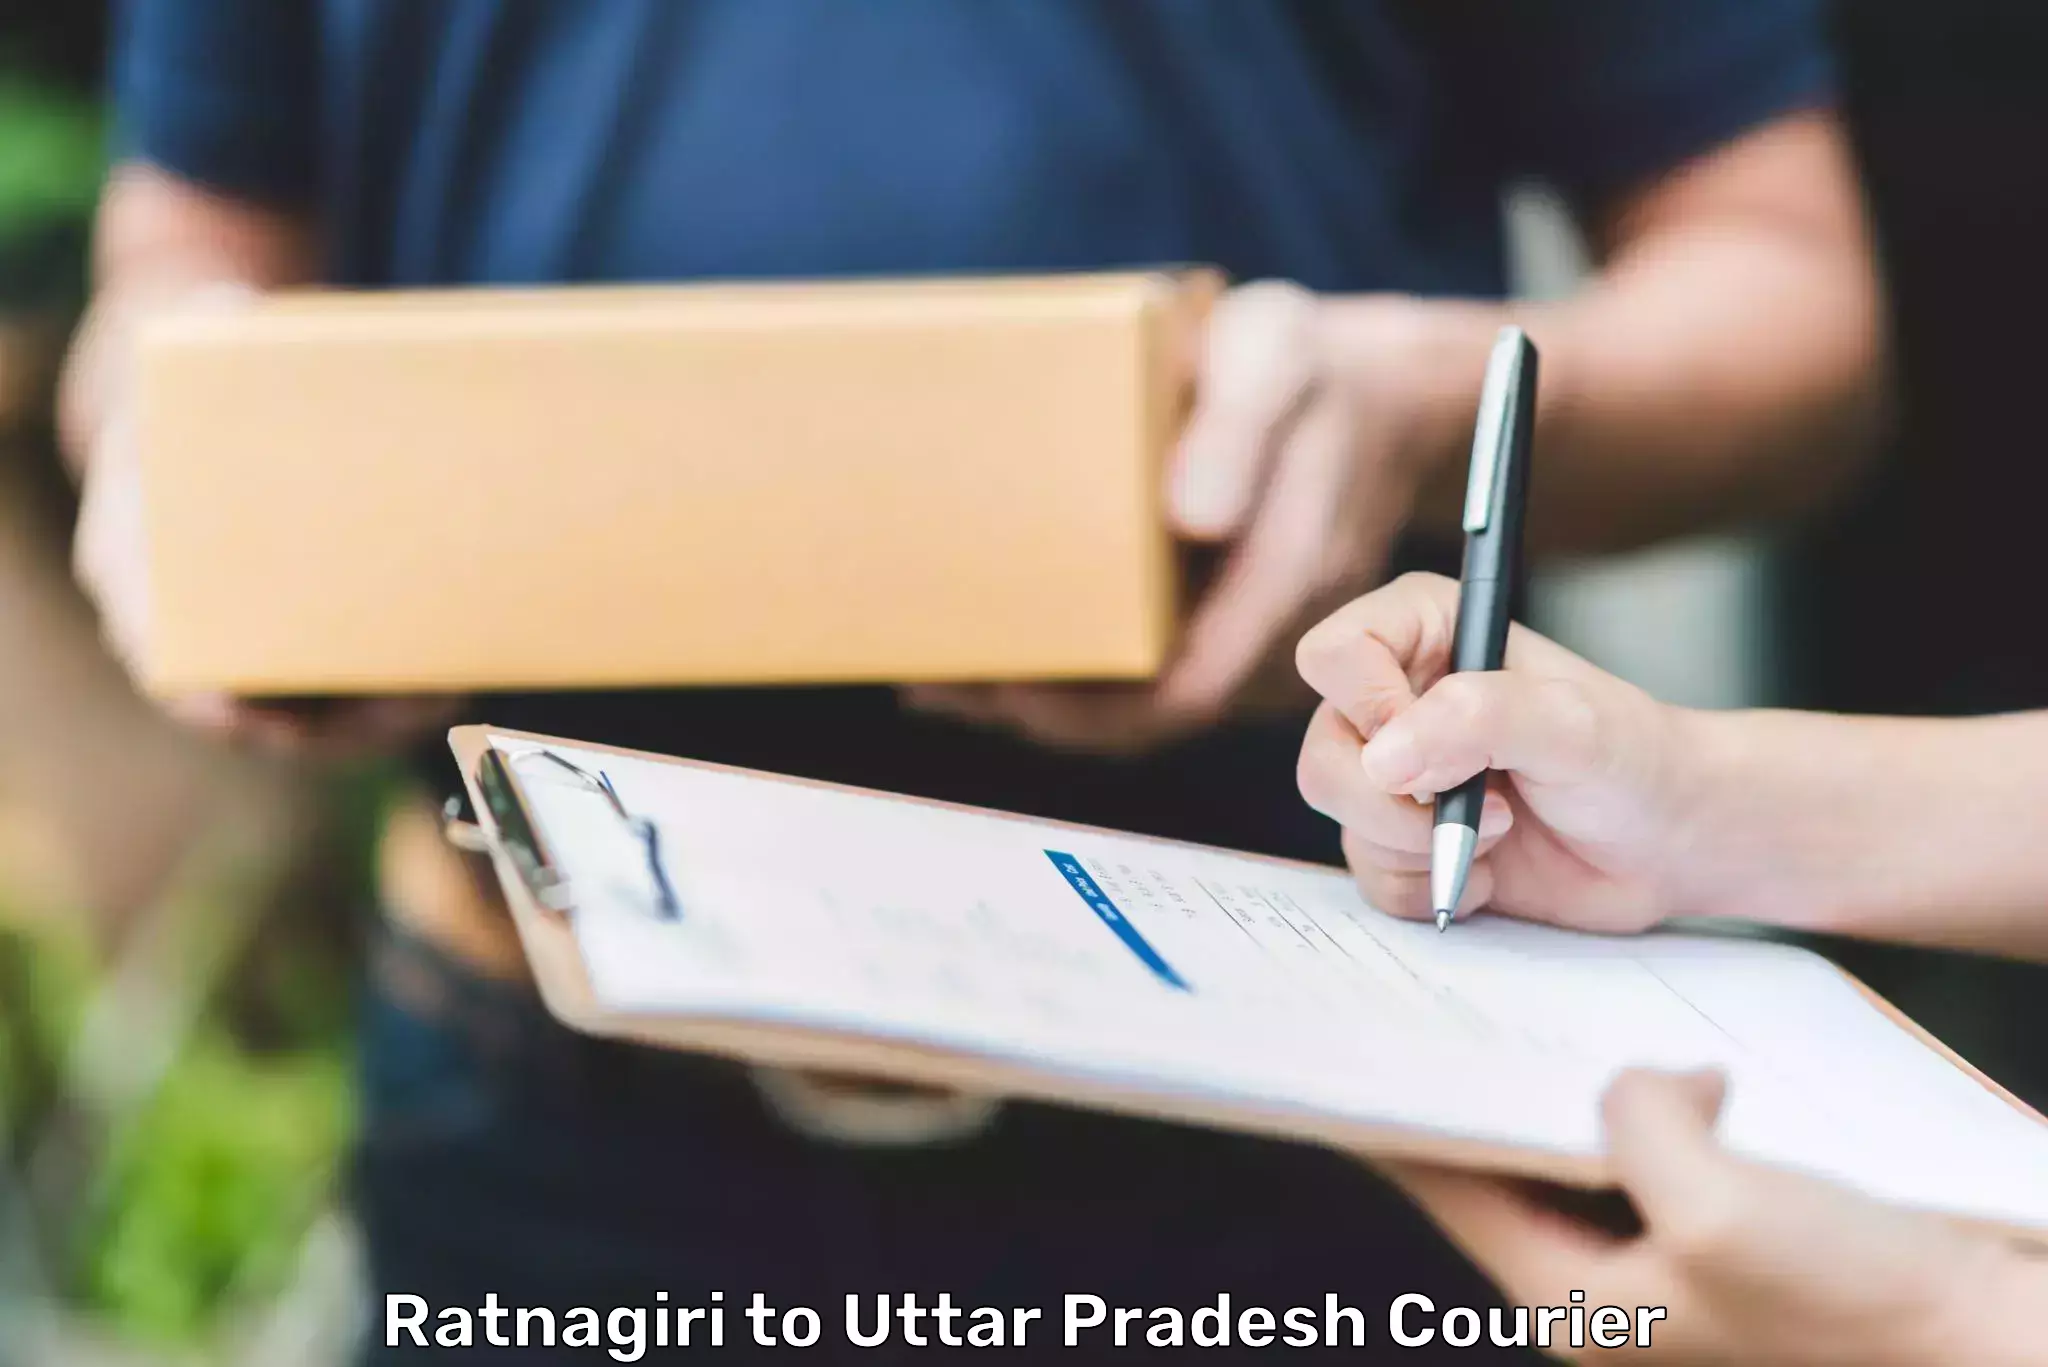 Smart courier technologies Ratnagiri to Agra